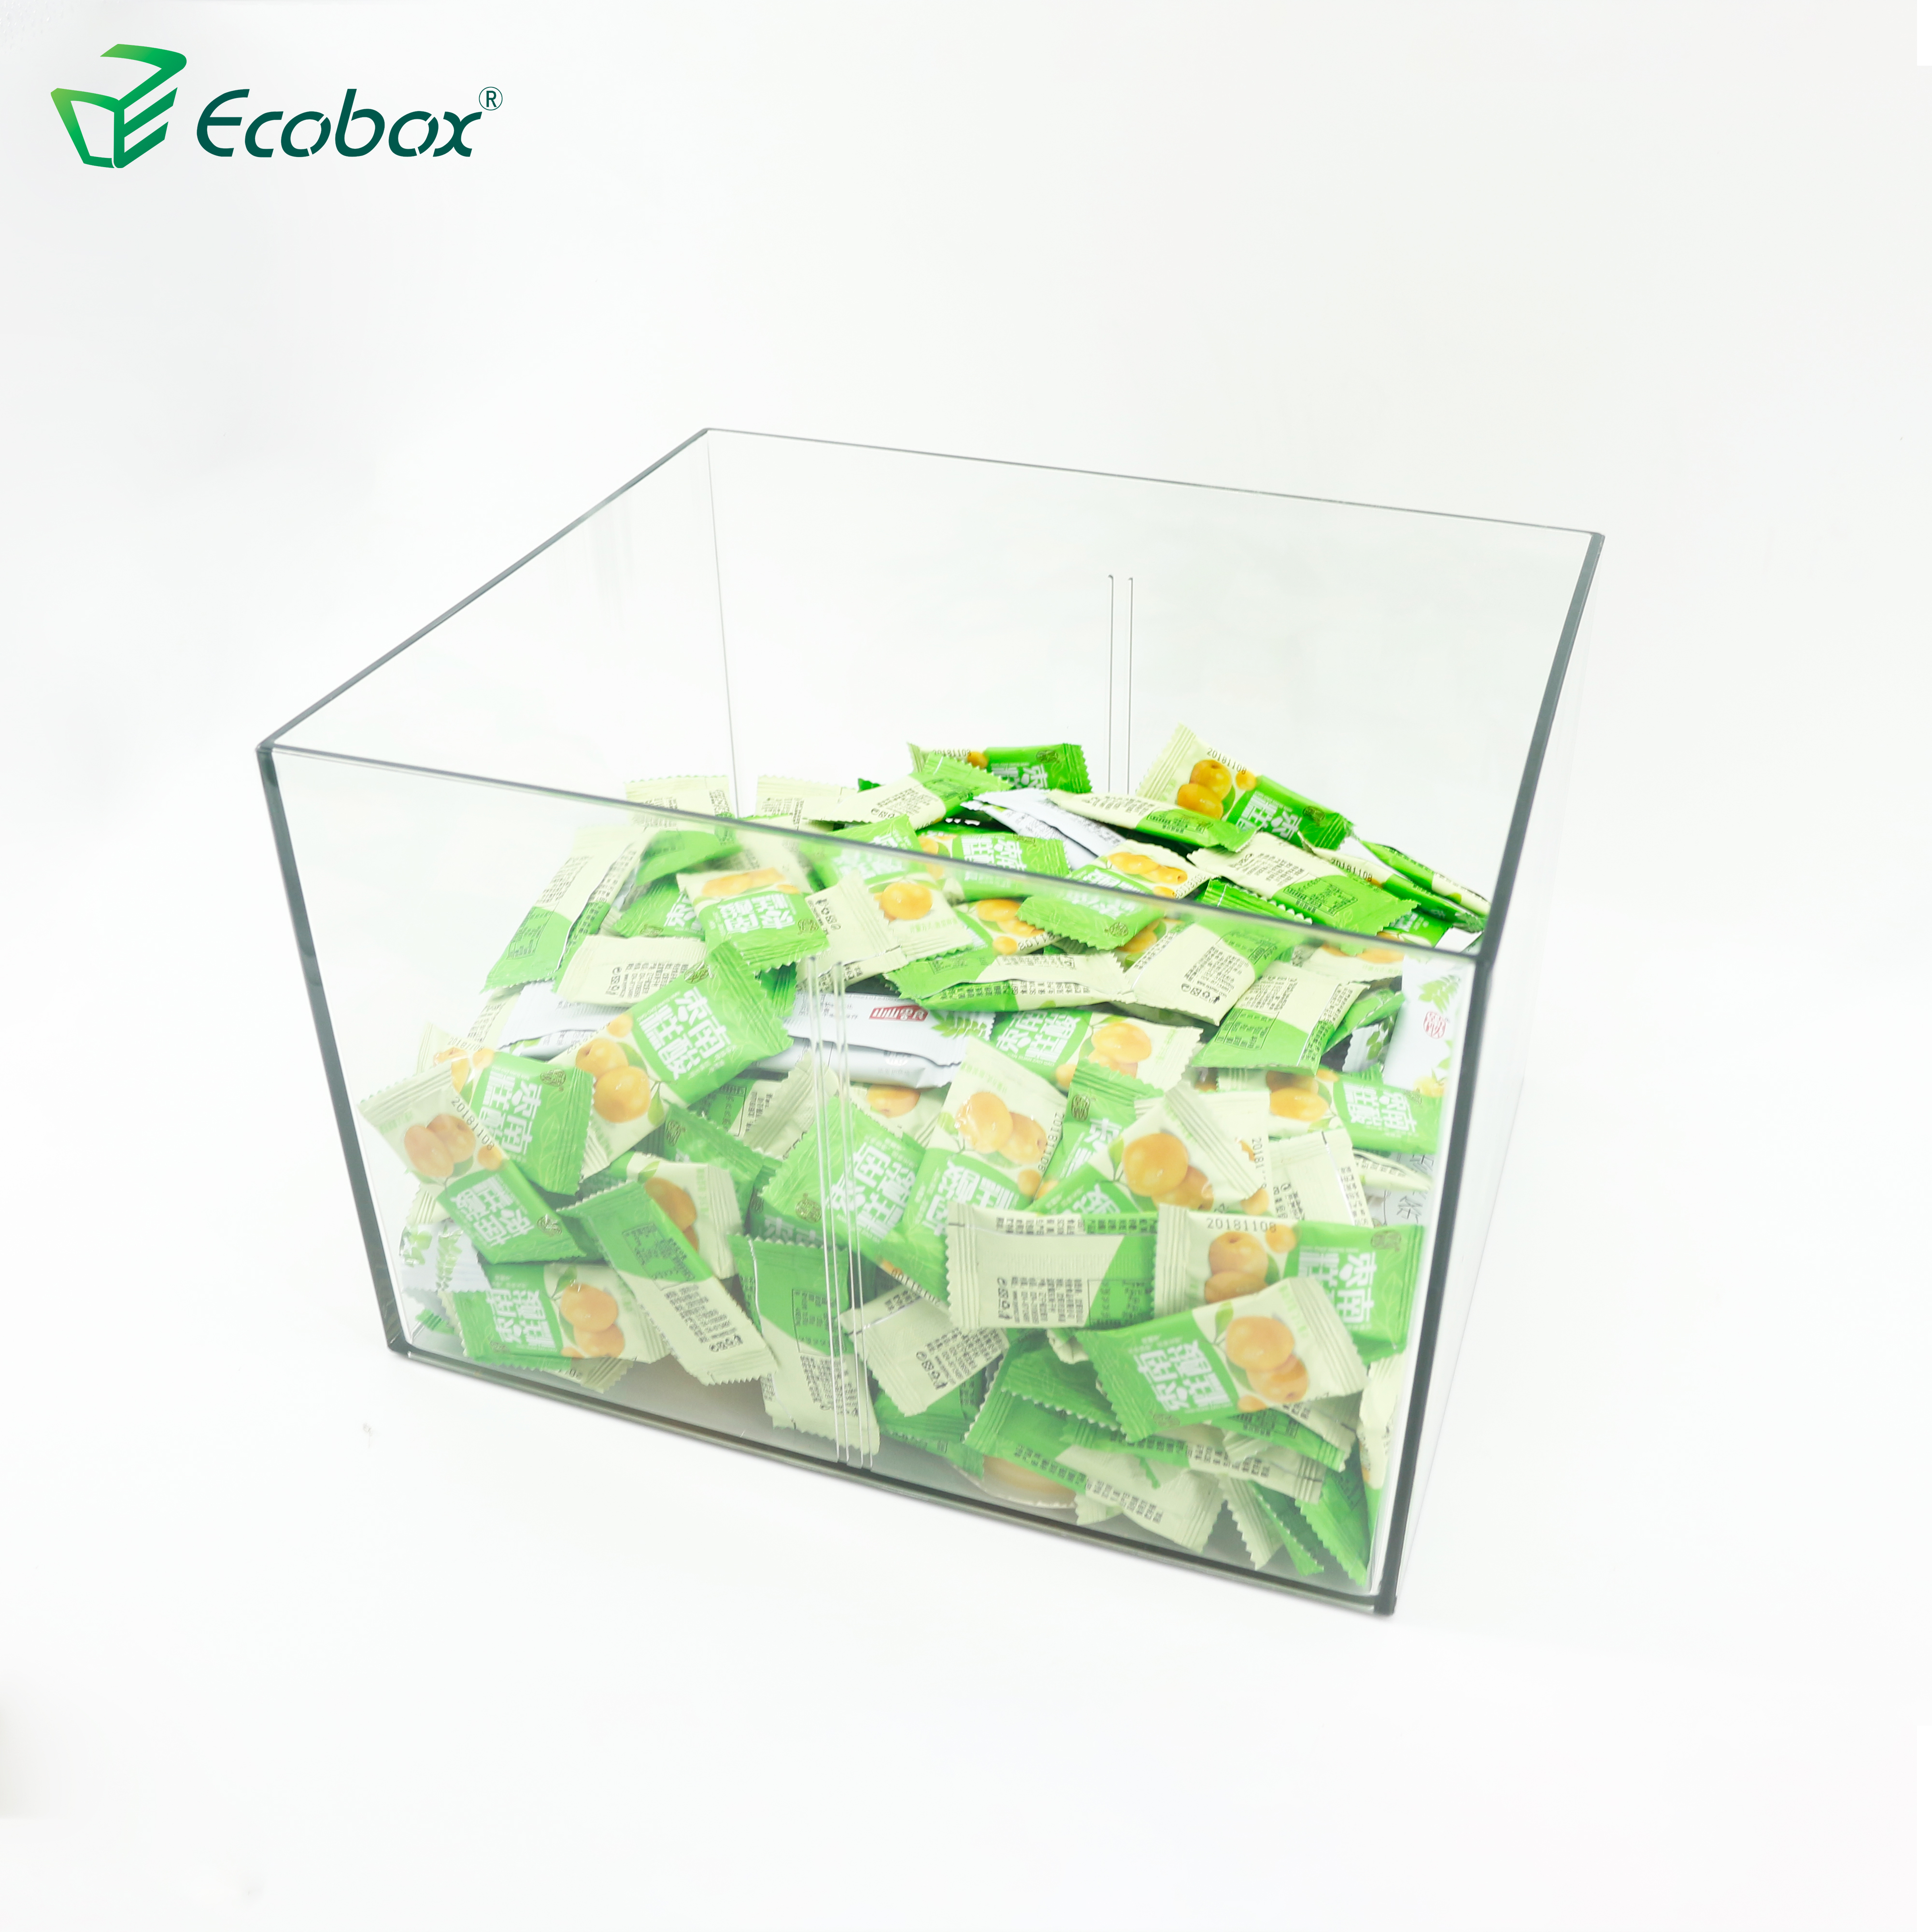 Ecobox SPH-006 Supermarket bulk bin